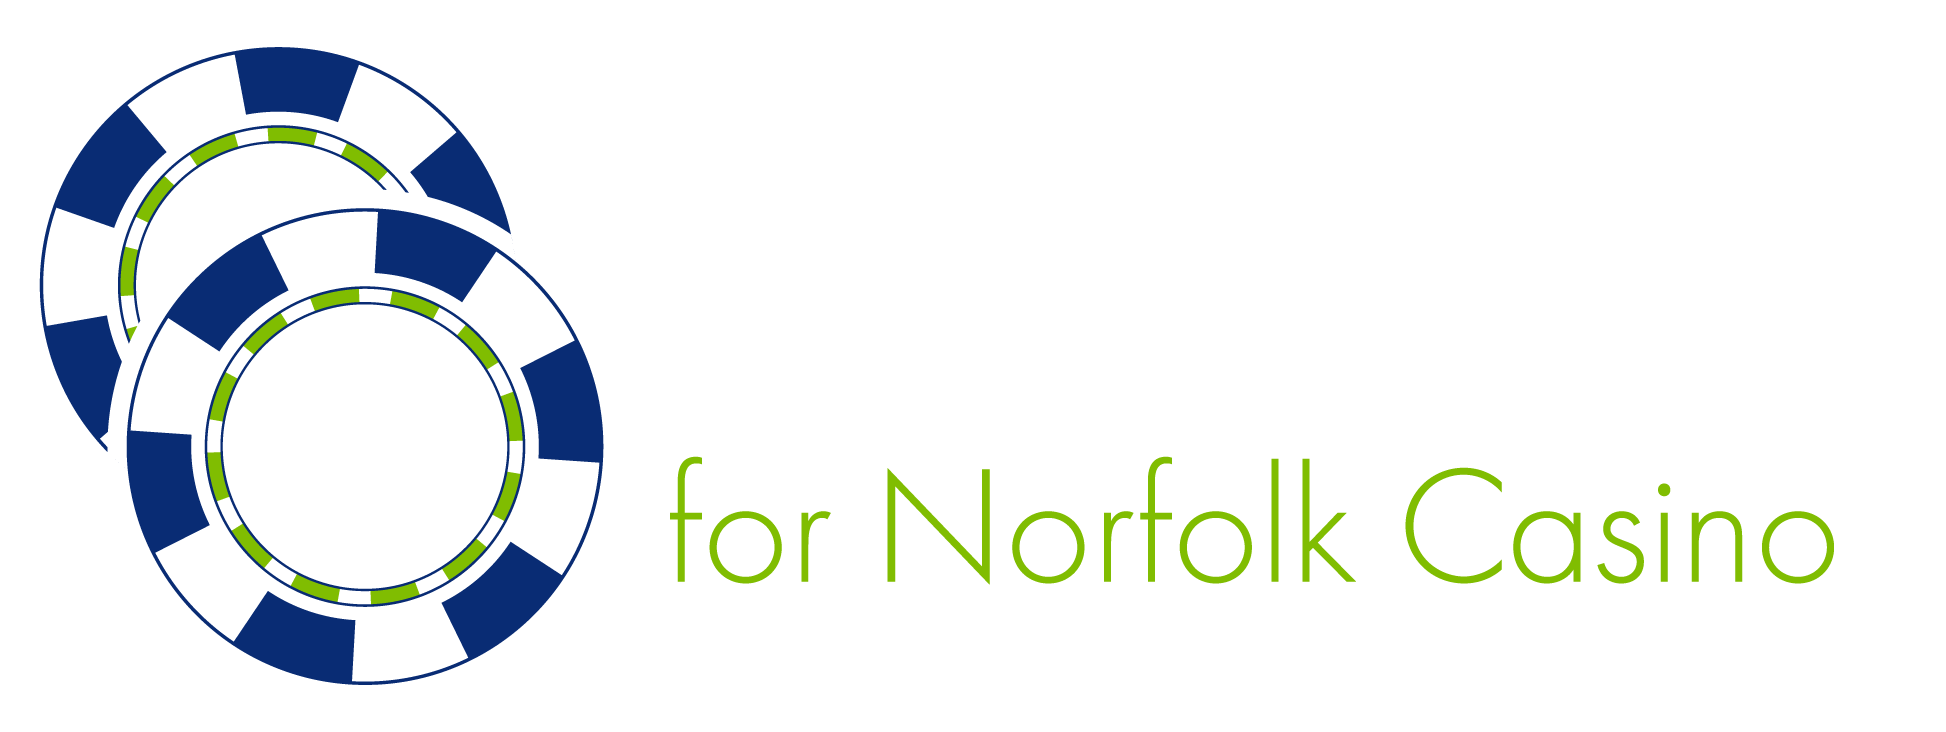 norfolk casino logo